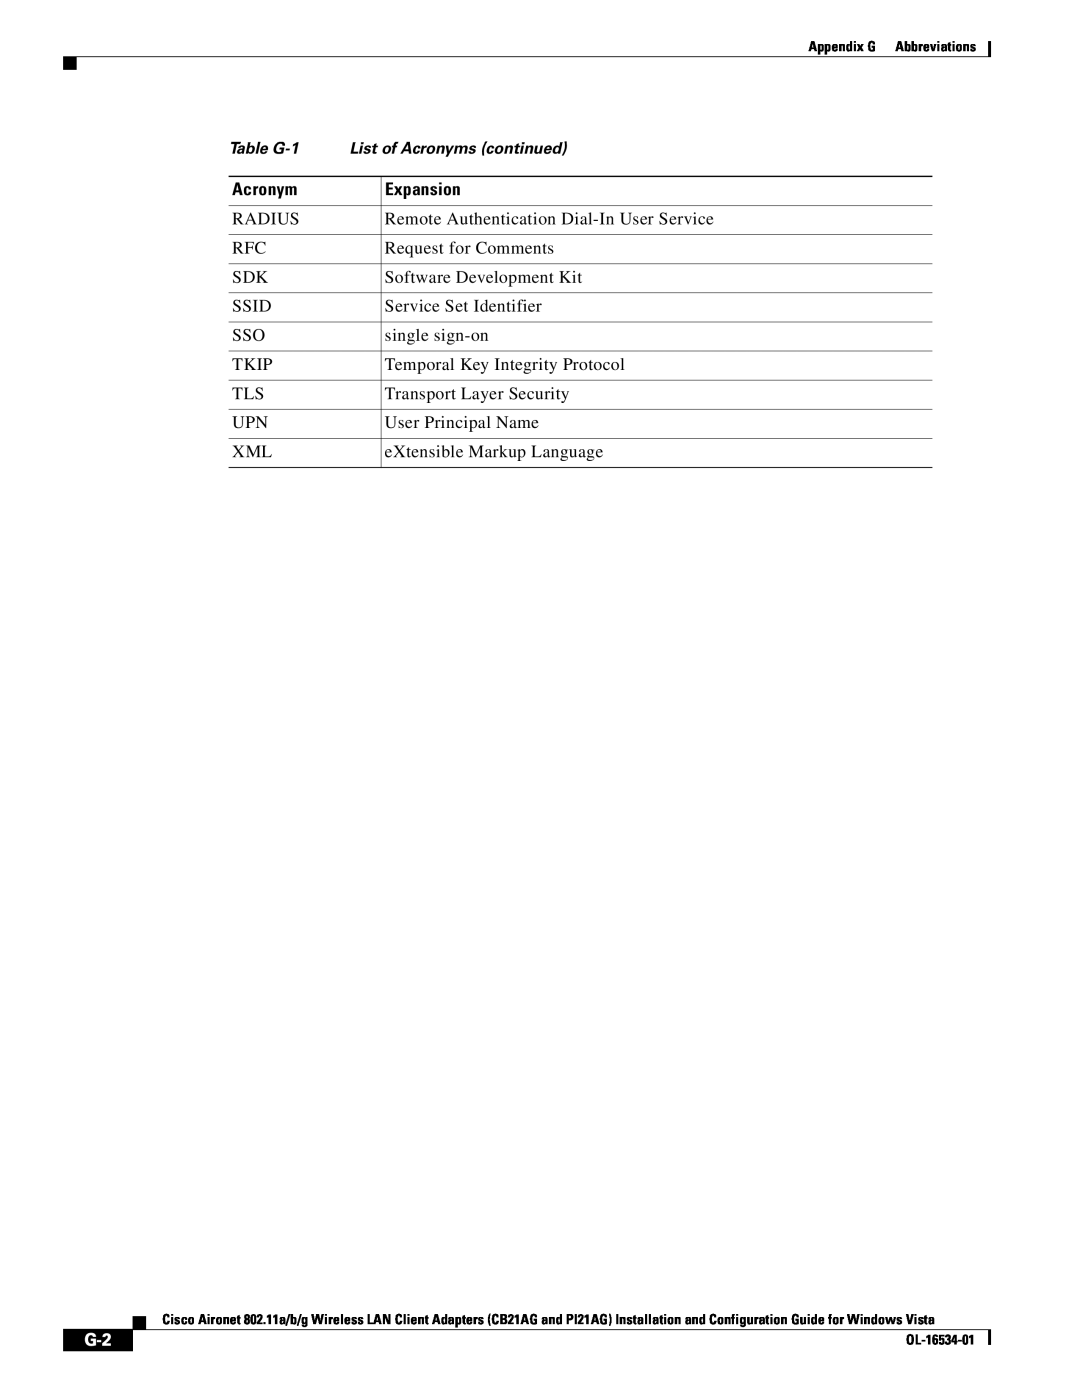 Cisco Systems PI21AG, CB21AG manual Table G-1, List of Acronyms continued 